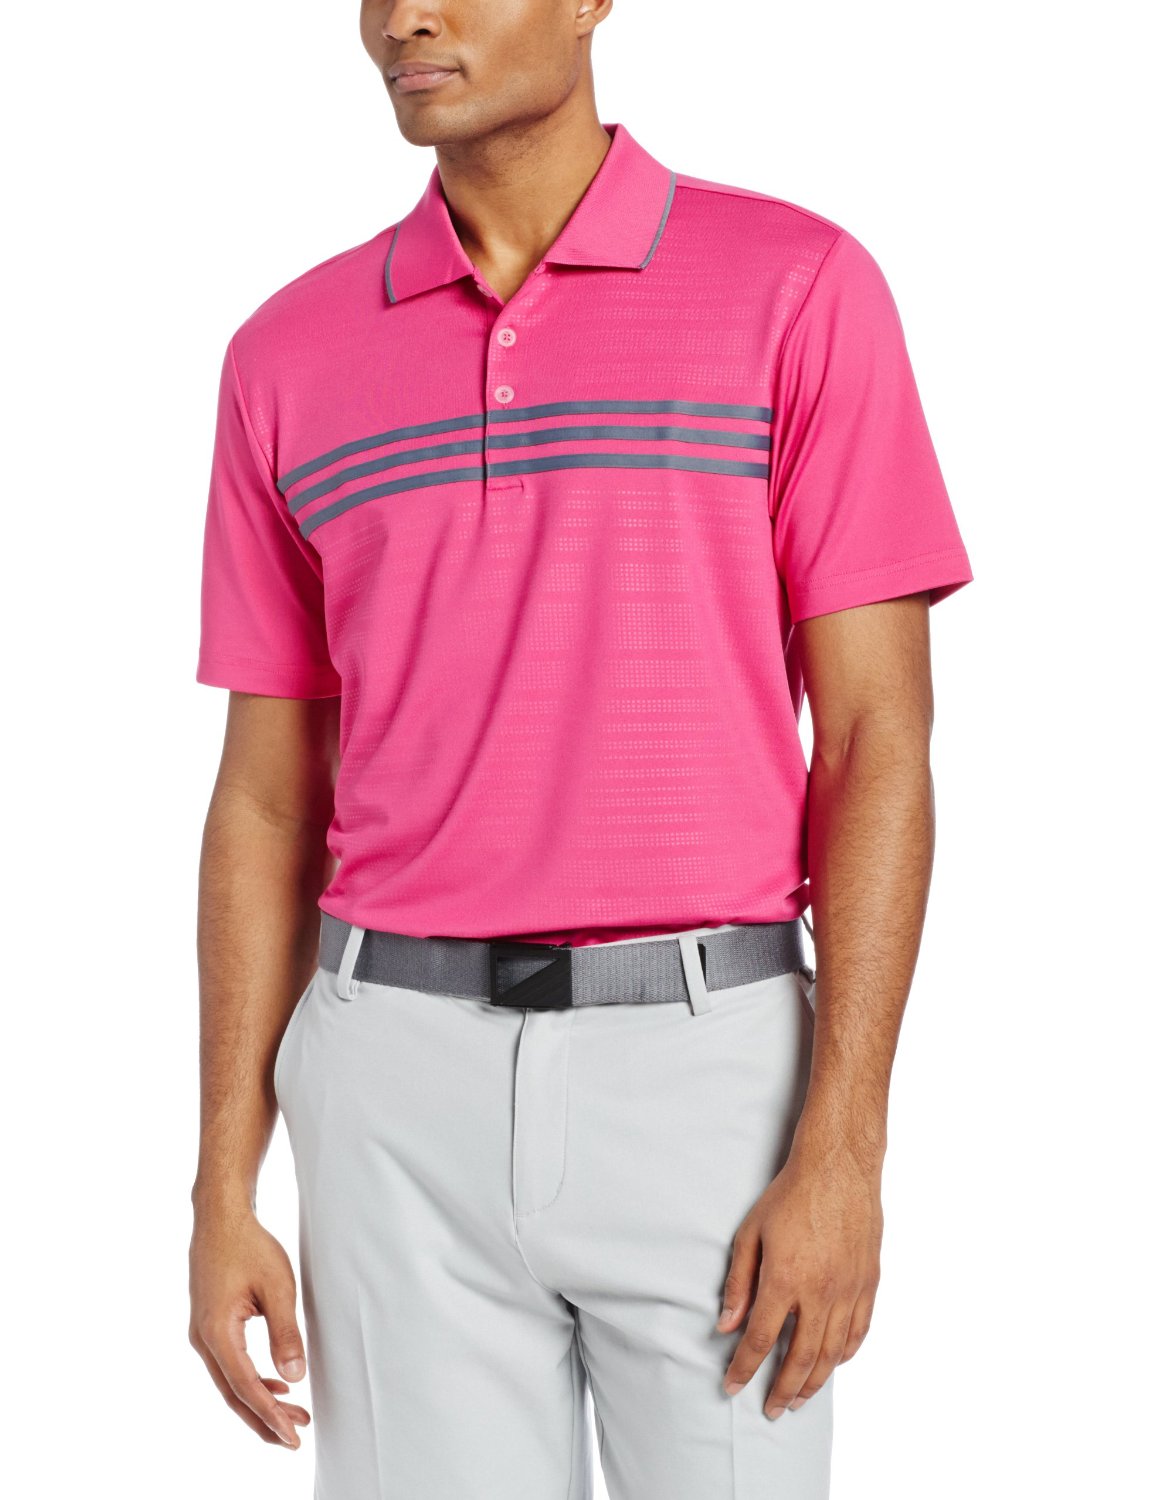 Adidas Puremotion Climacool 3 Stripes Chest Golf Polo Shirts